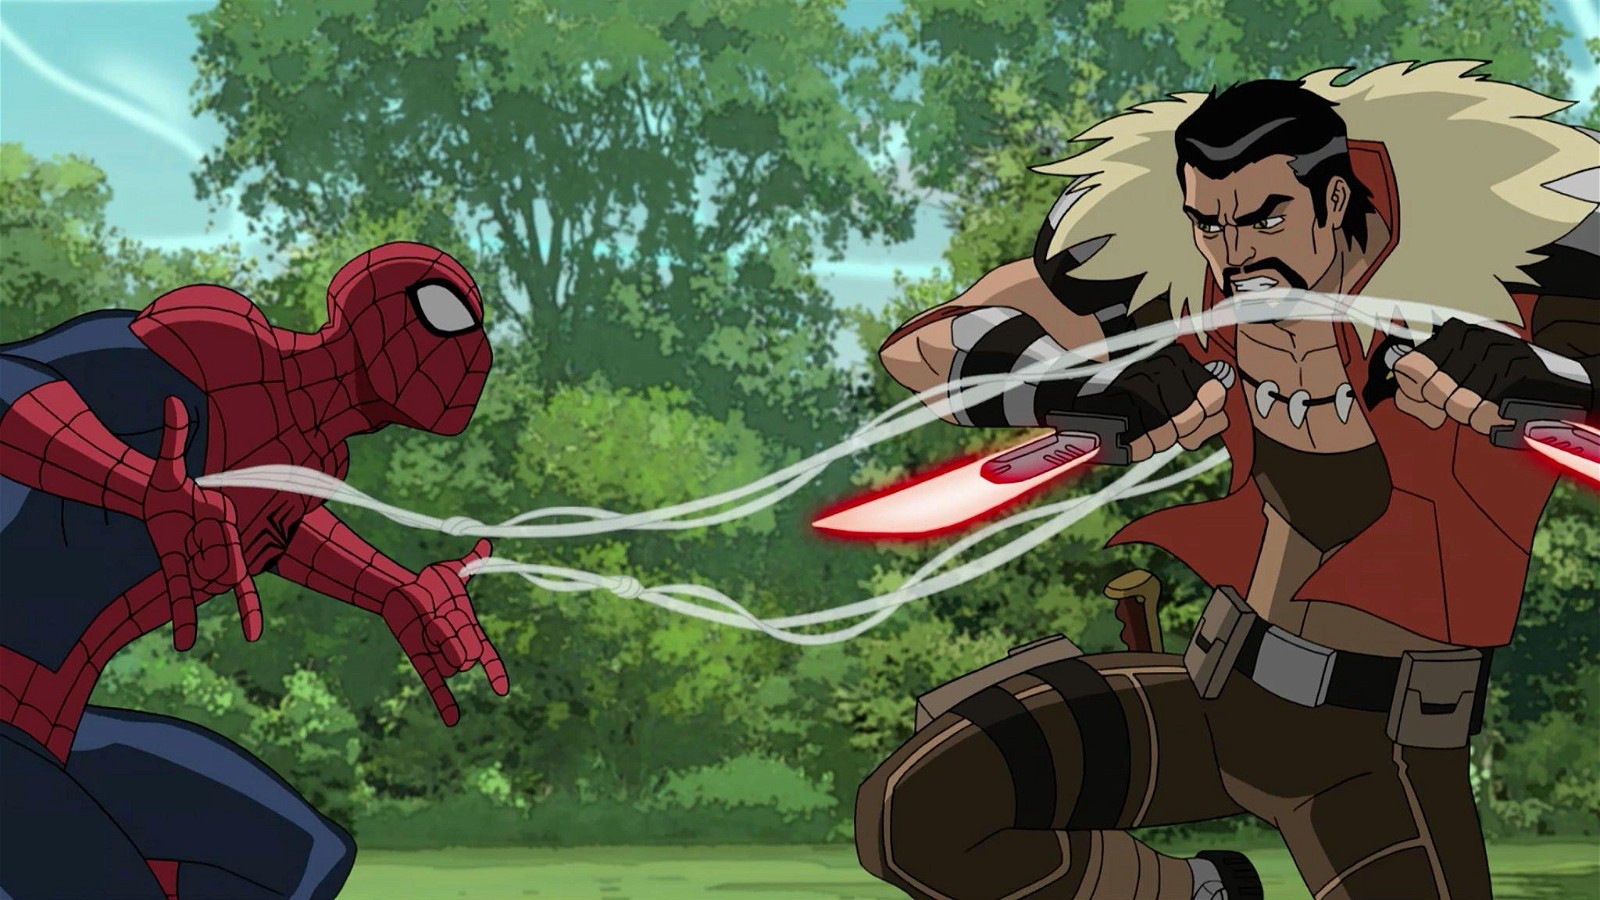 Kraven the Hunter vs Spider-Man